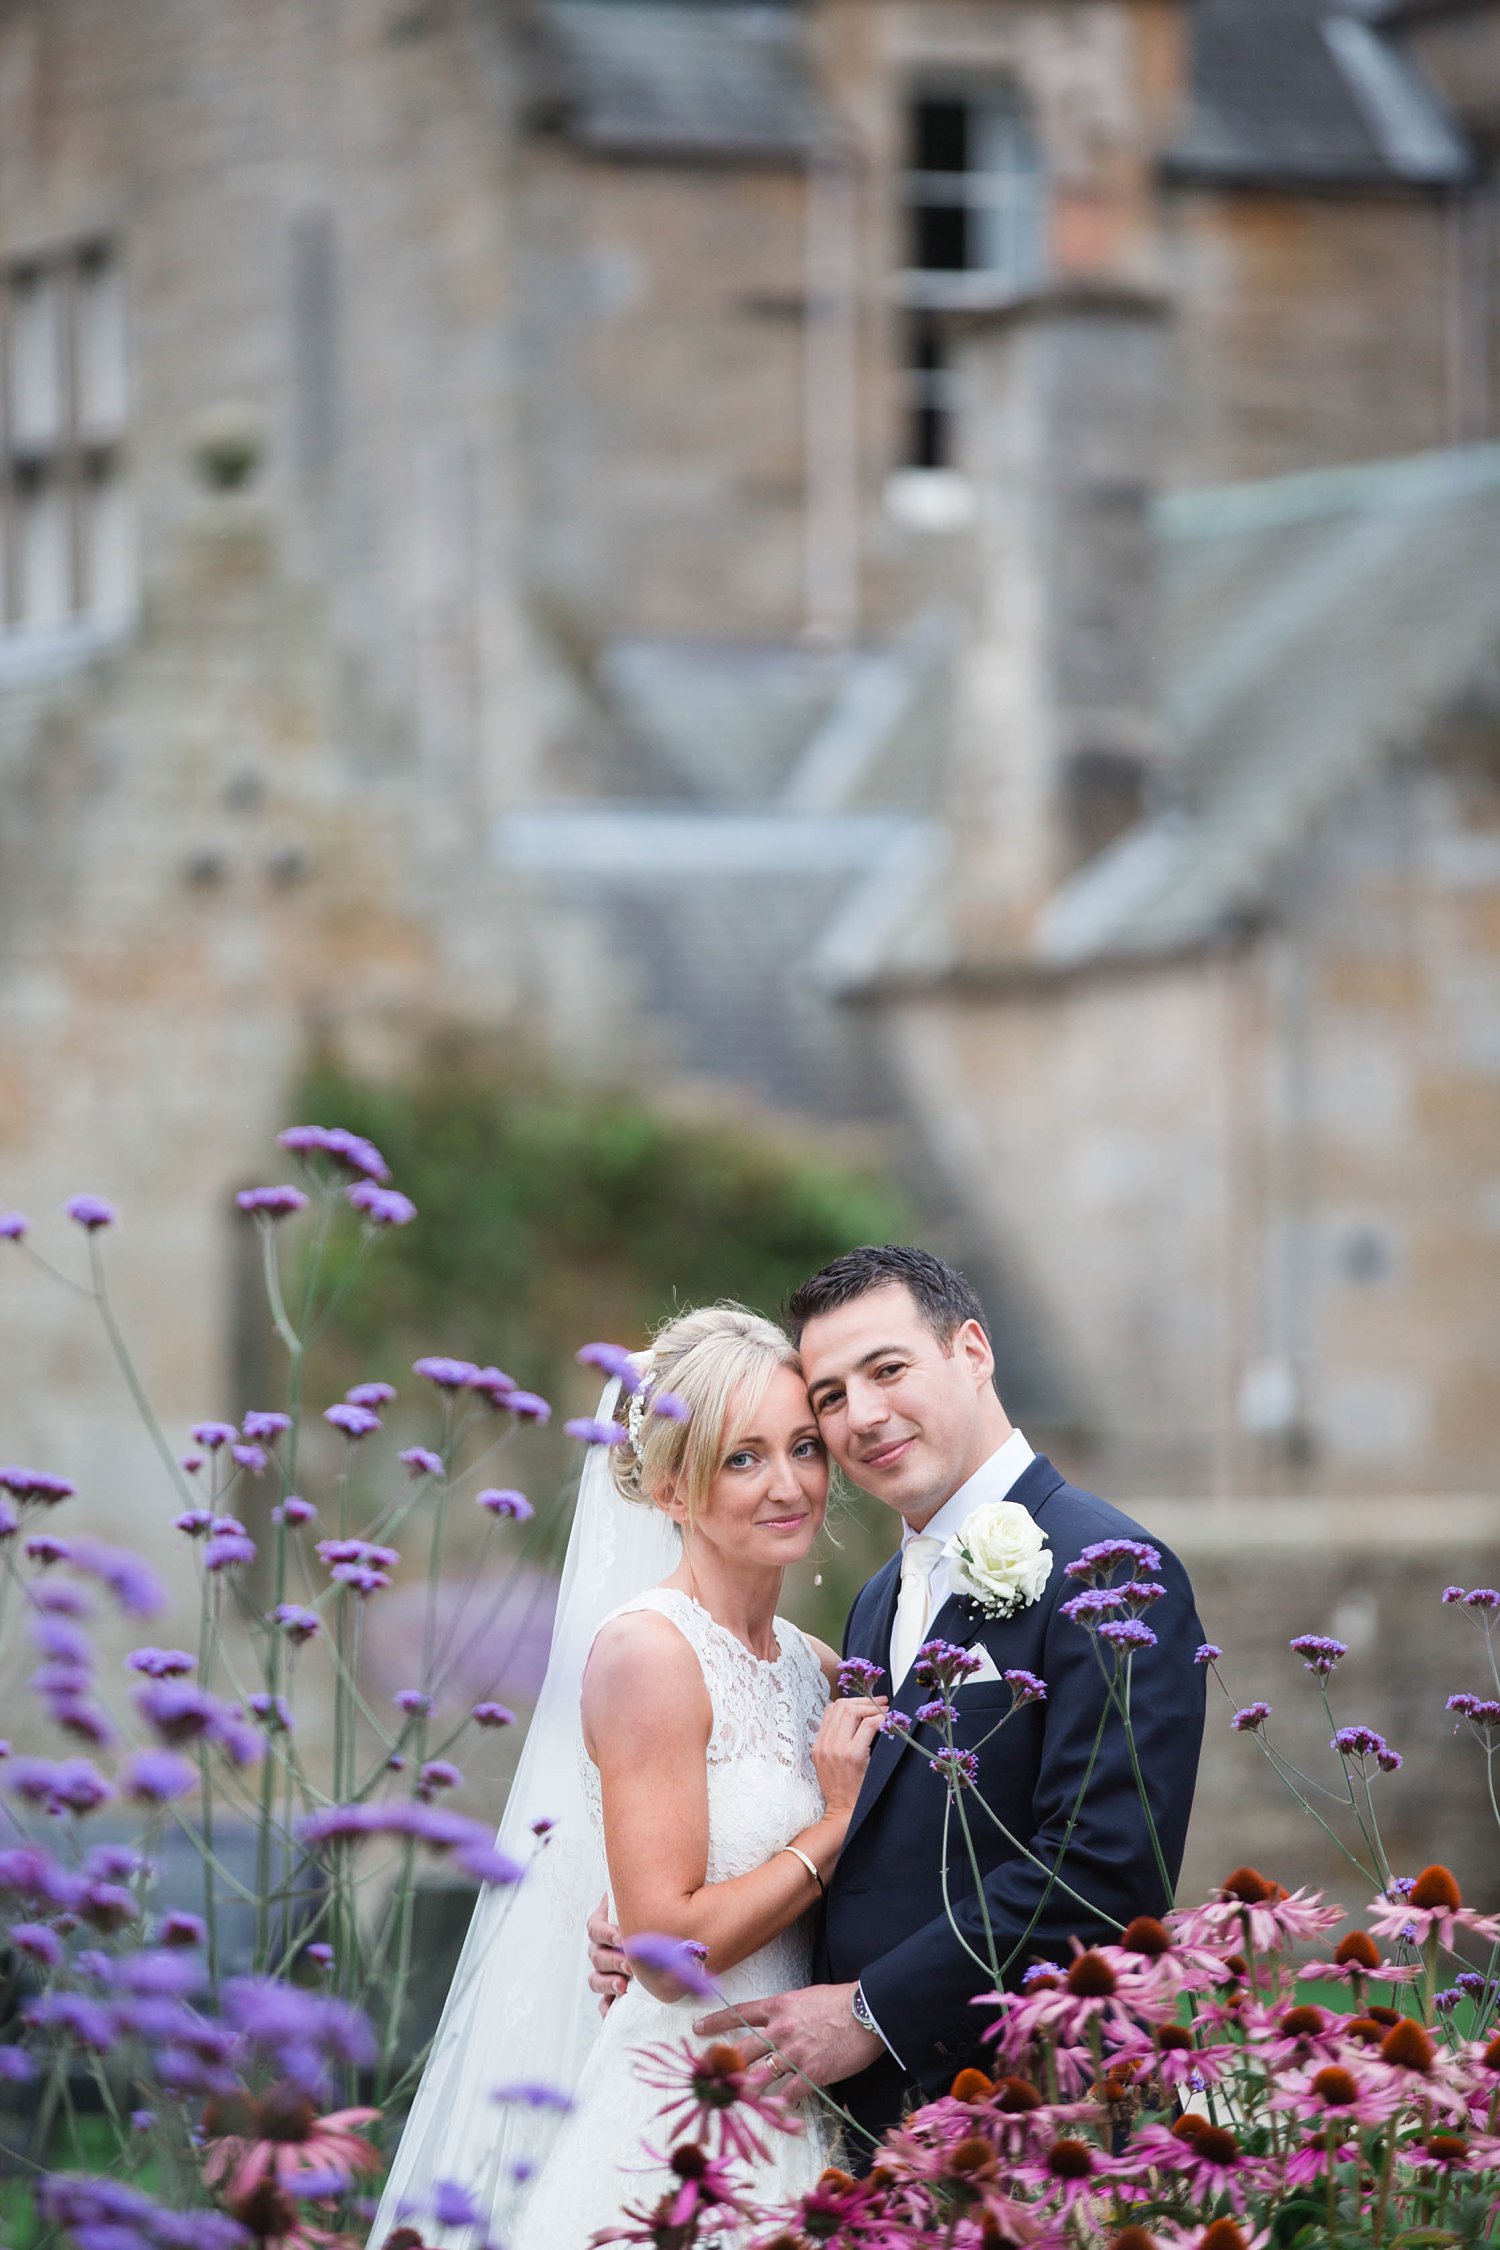 Autumn wedding at Carlowrie Castle, Edinburgh. Luxury castle wedding in Fine Art Wedding Photography photo.